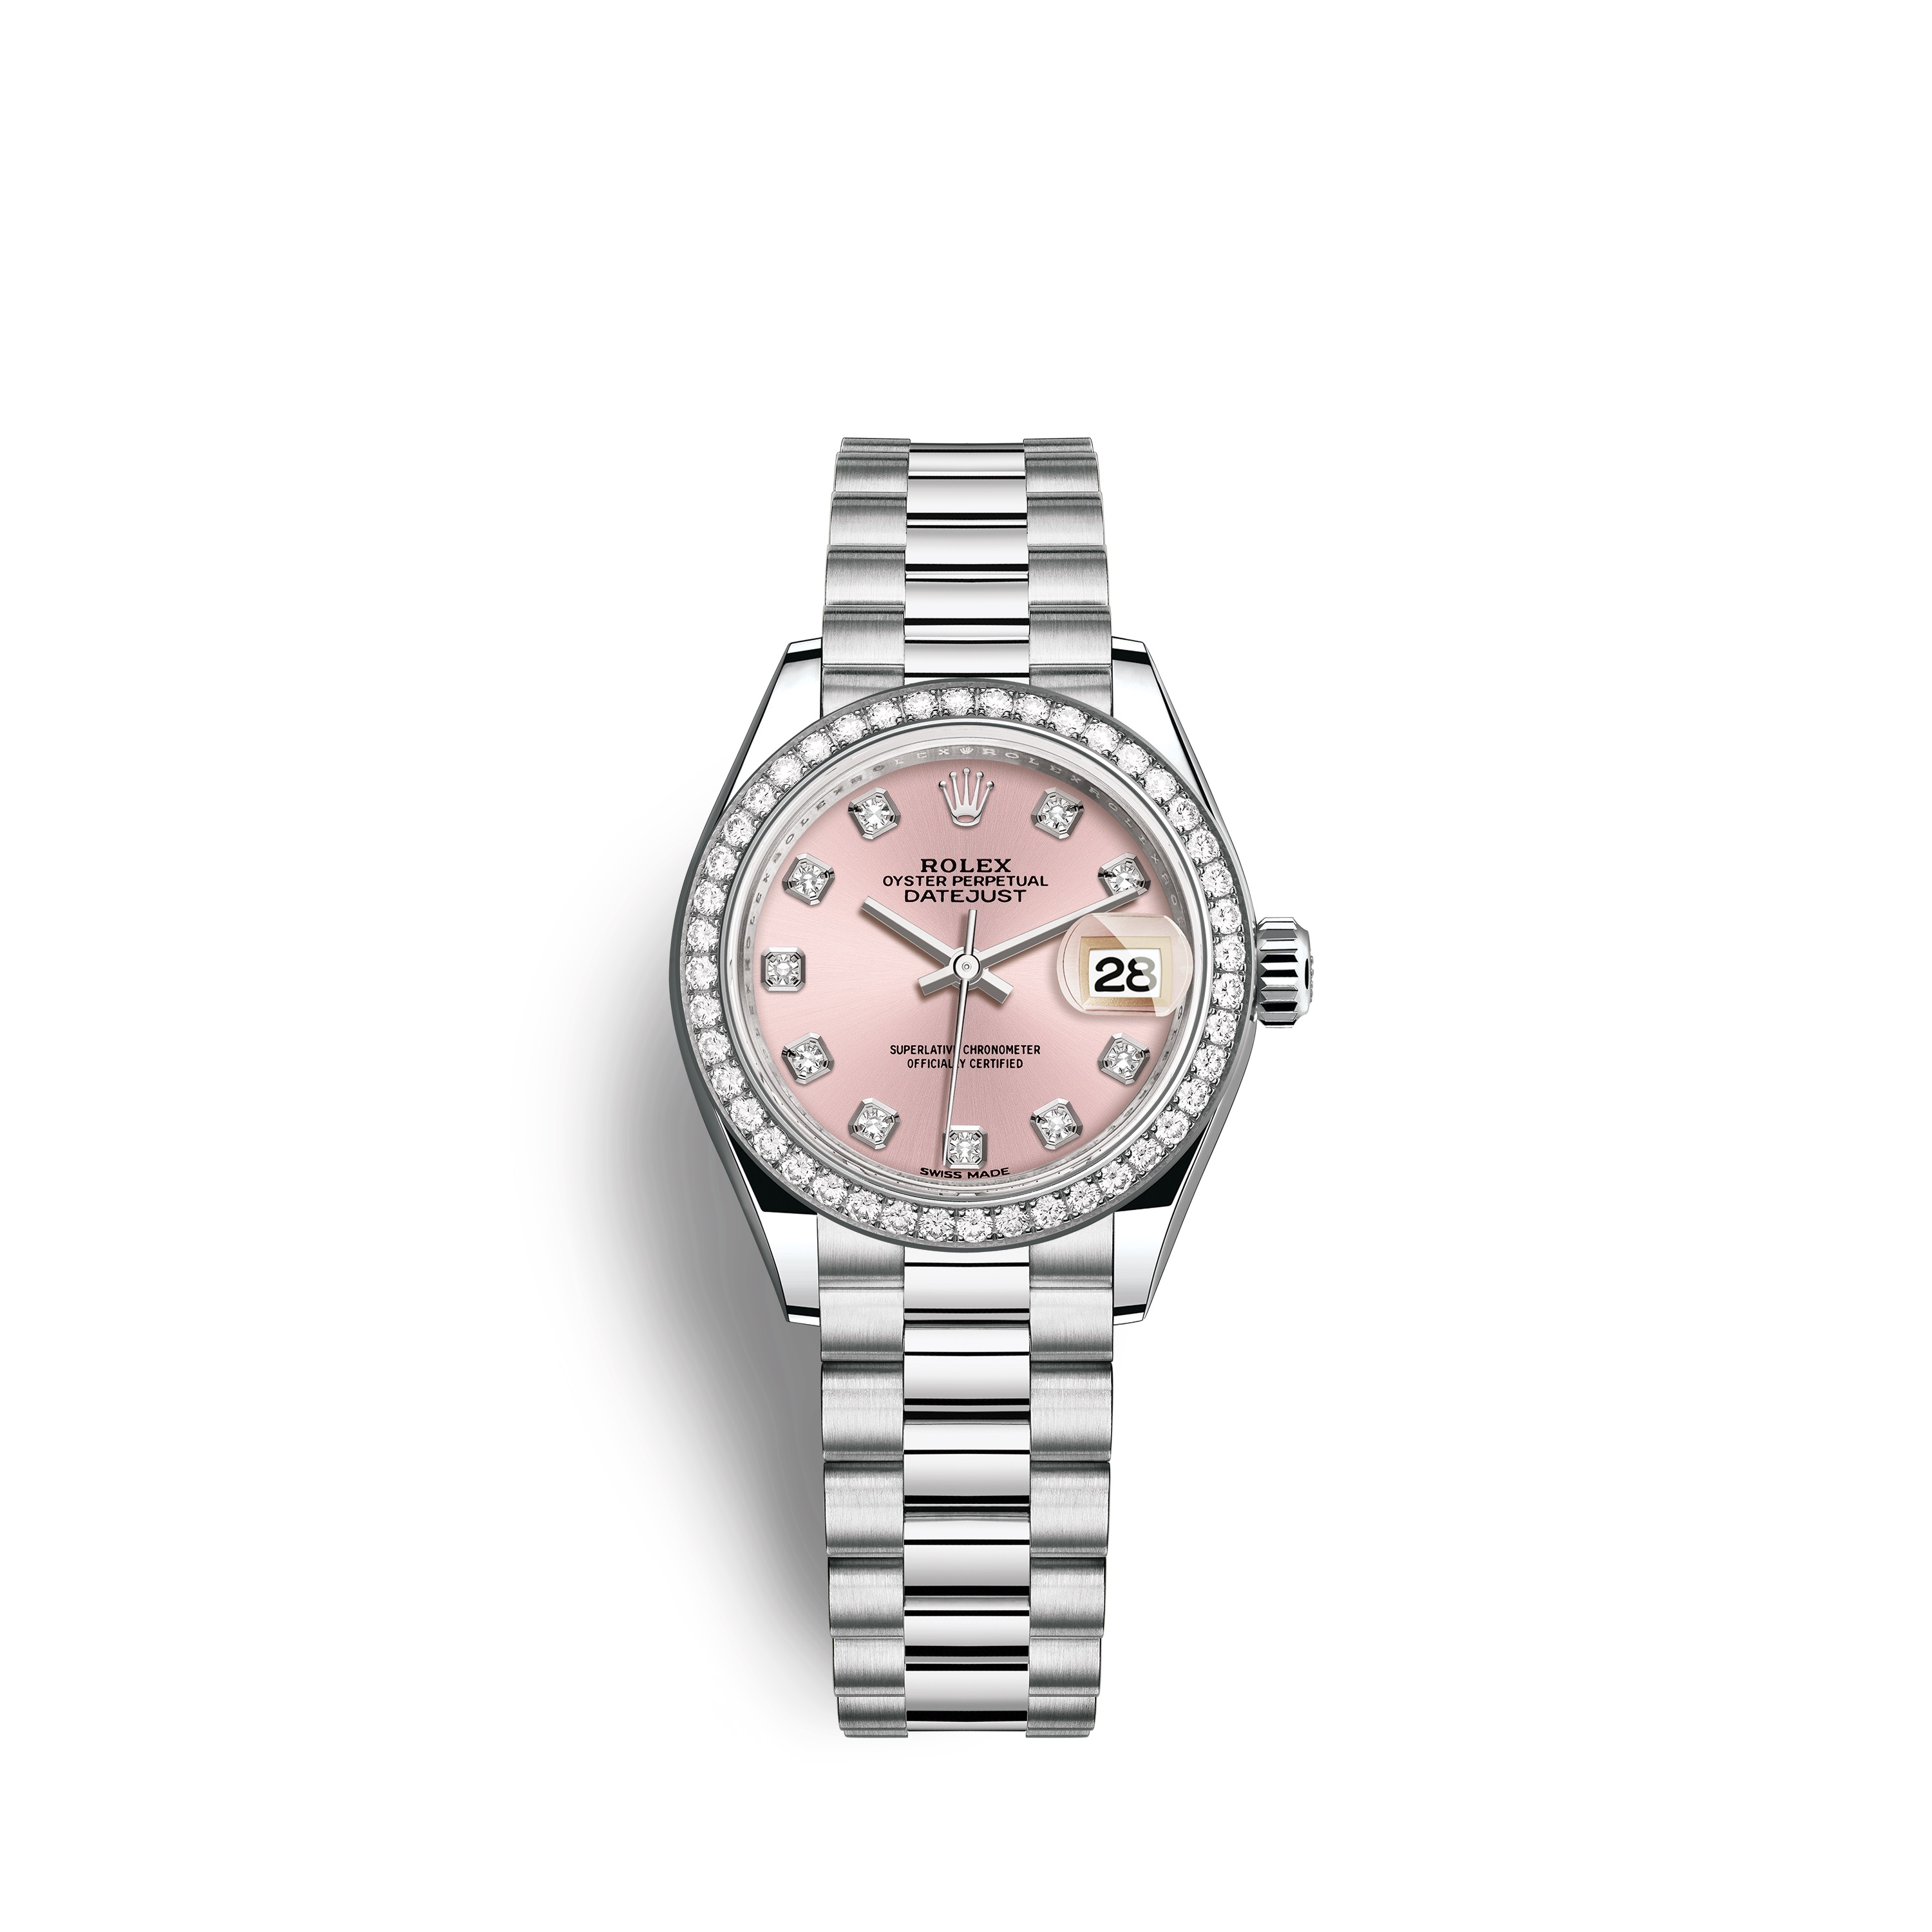 Lady-Datejust 28 279136RBR Platinum & Diamonds Watch (Pink Set with Diamonds)